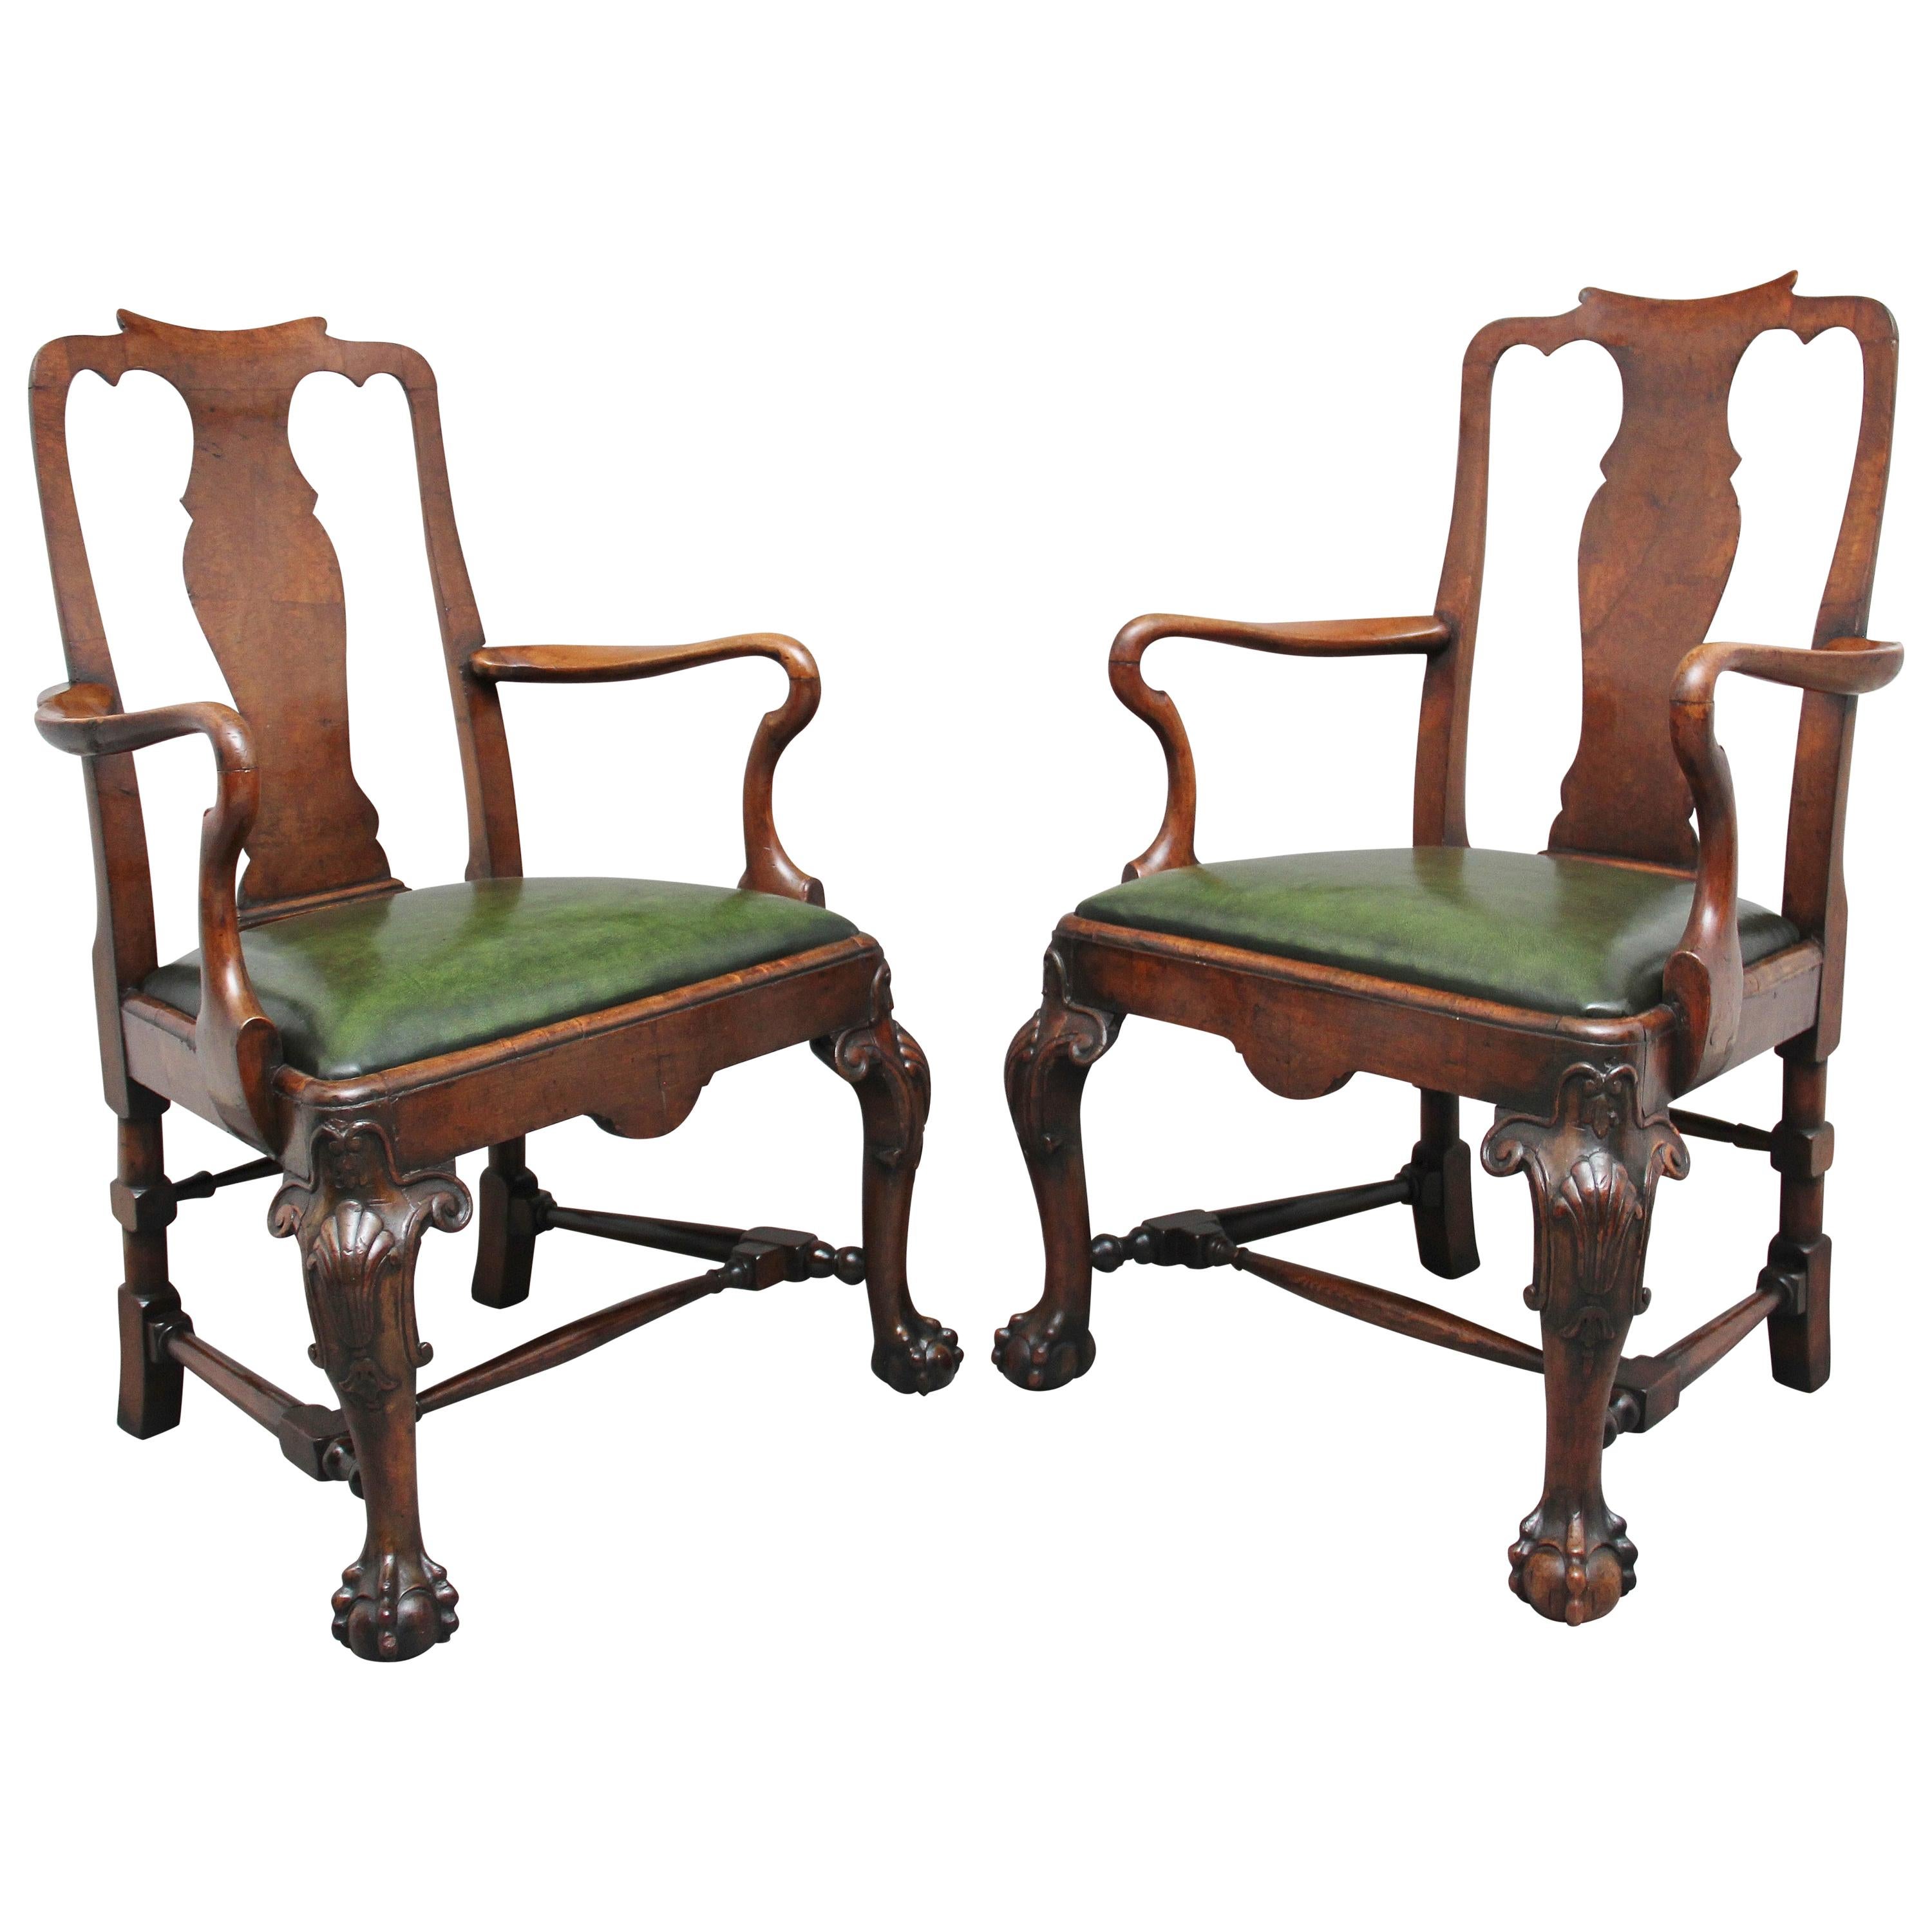 Pair of 19th Century Walnut Armchairs